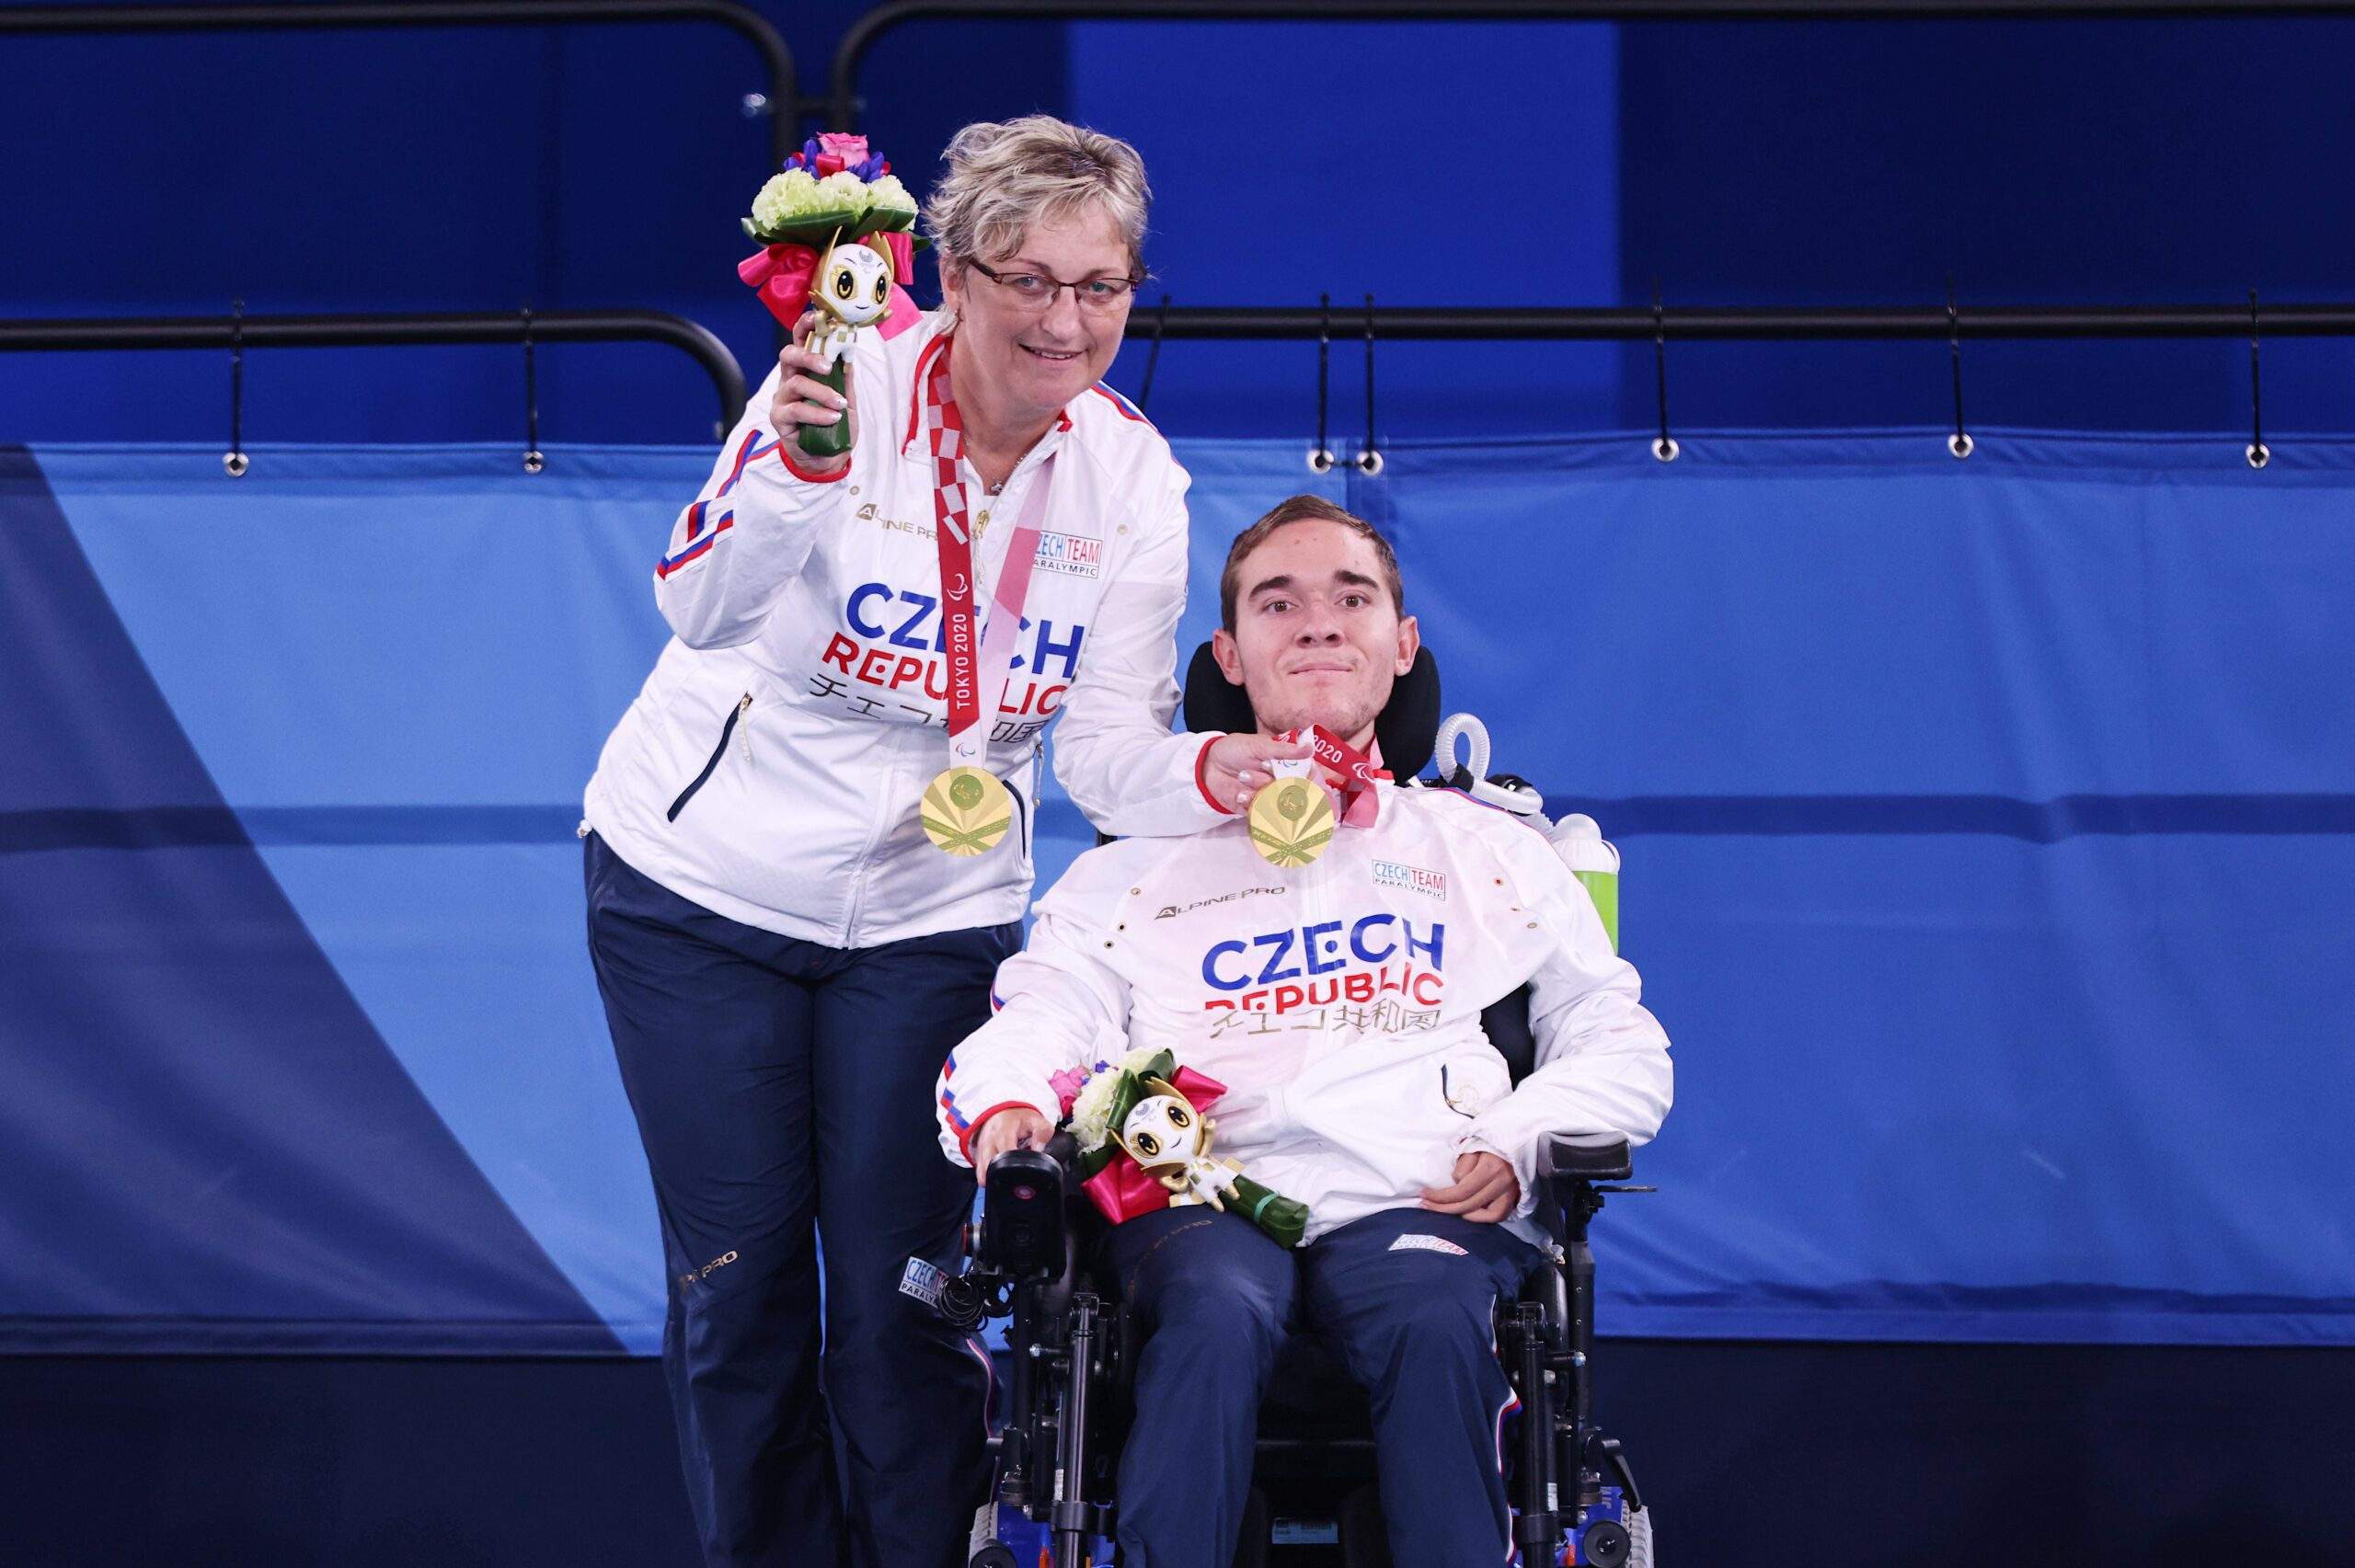 Adam Peška letos na hrách v Tokiu vybojoval zlatou medaili ve sportu boccia. Jeho asistentkou, která se o něj stará při sportu i během dne, je jeho maminka Ivana Pešková.